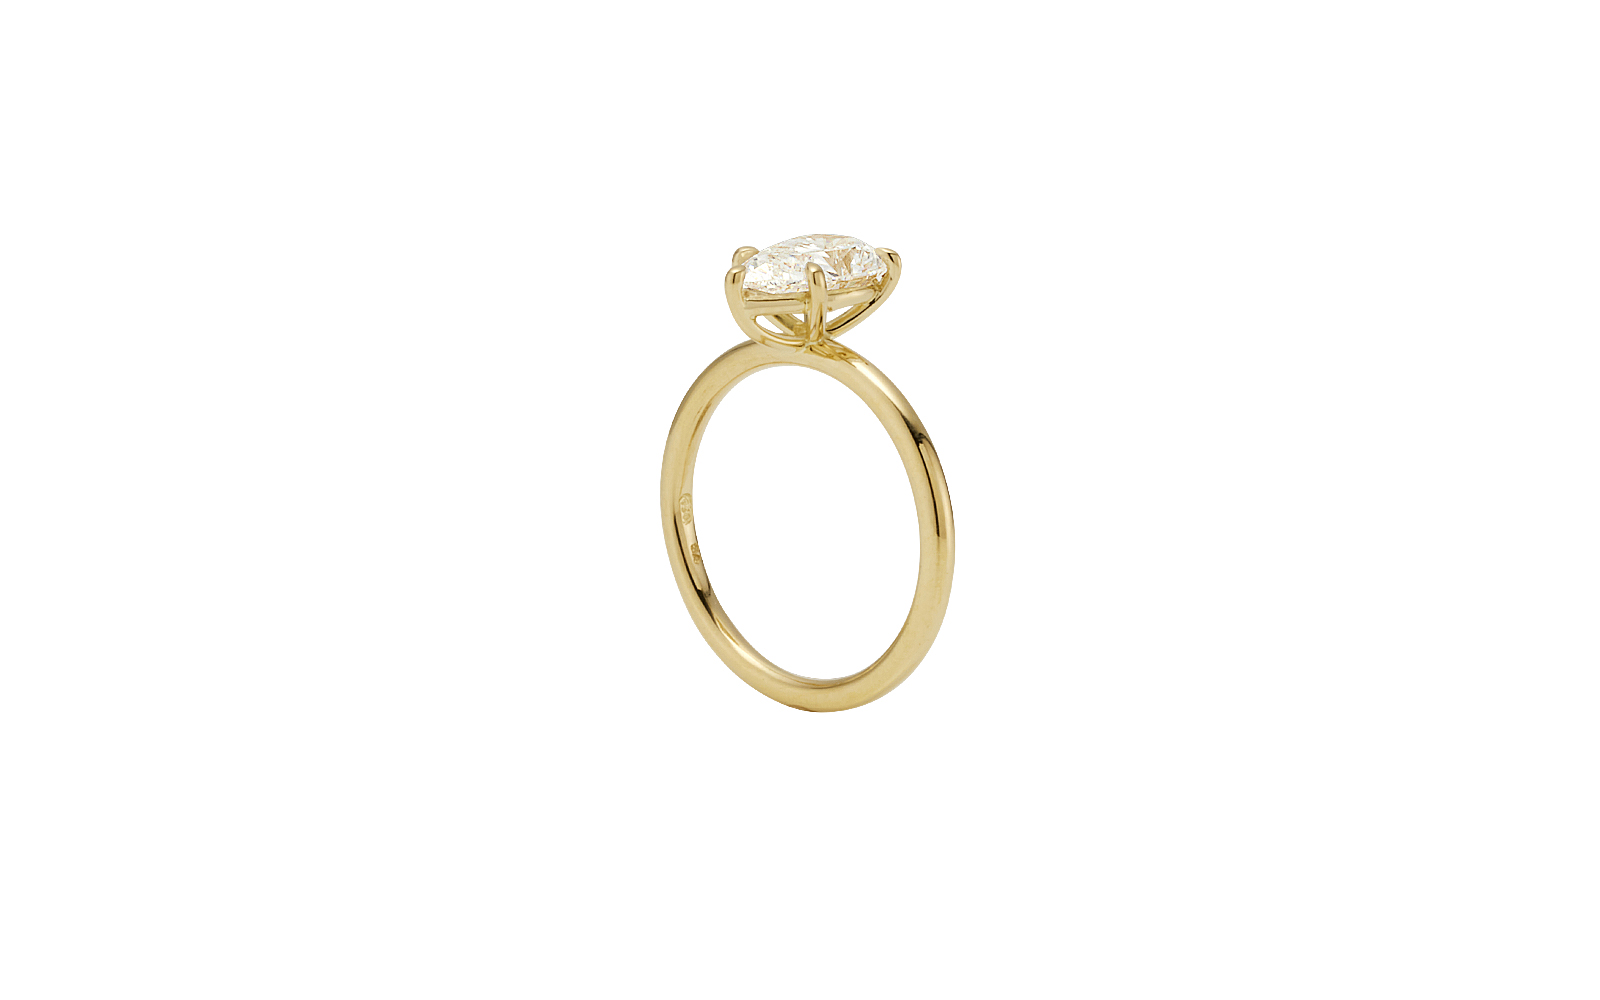 Fairytale Pear Cut 1.510ct DVS1 Diamond Ring 18k Yellow Gold